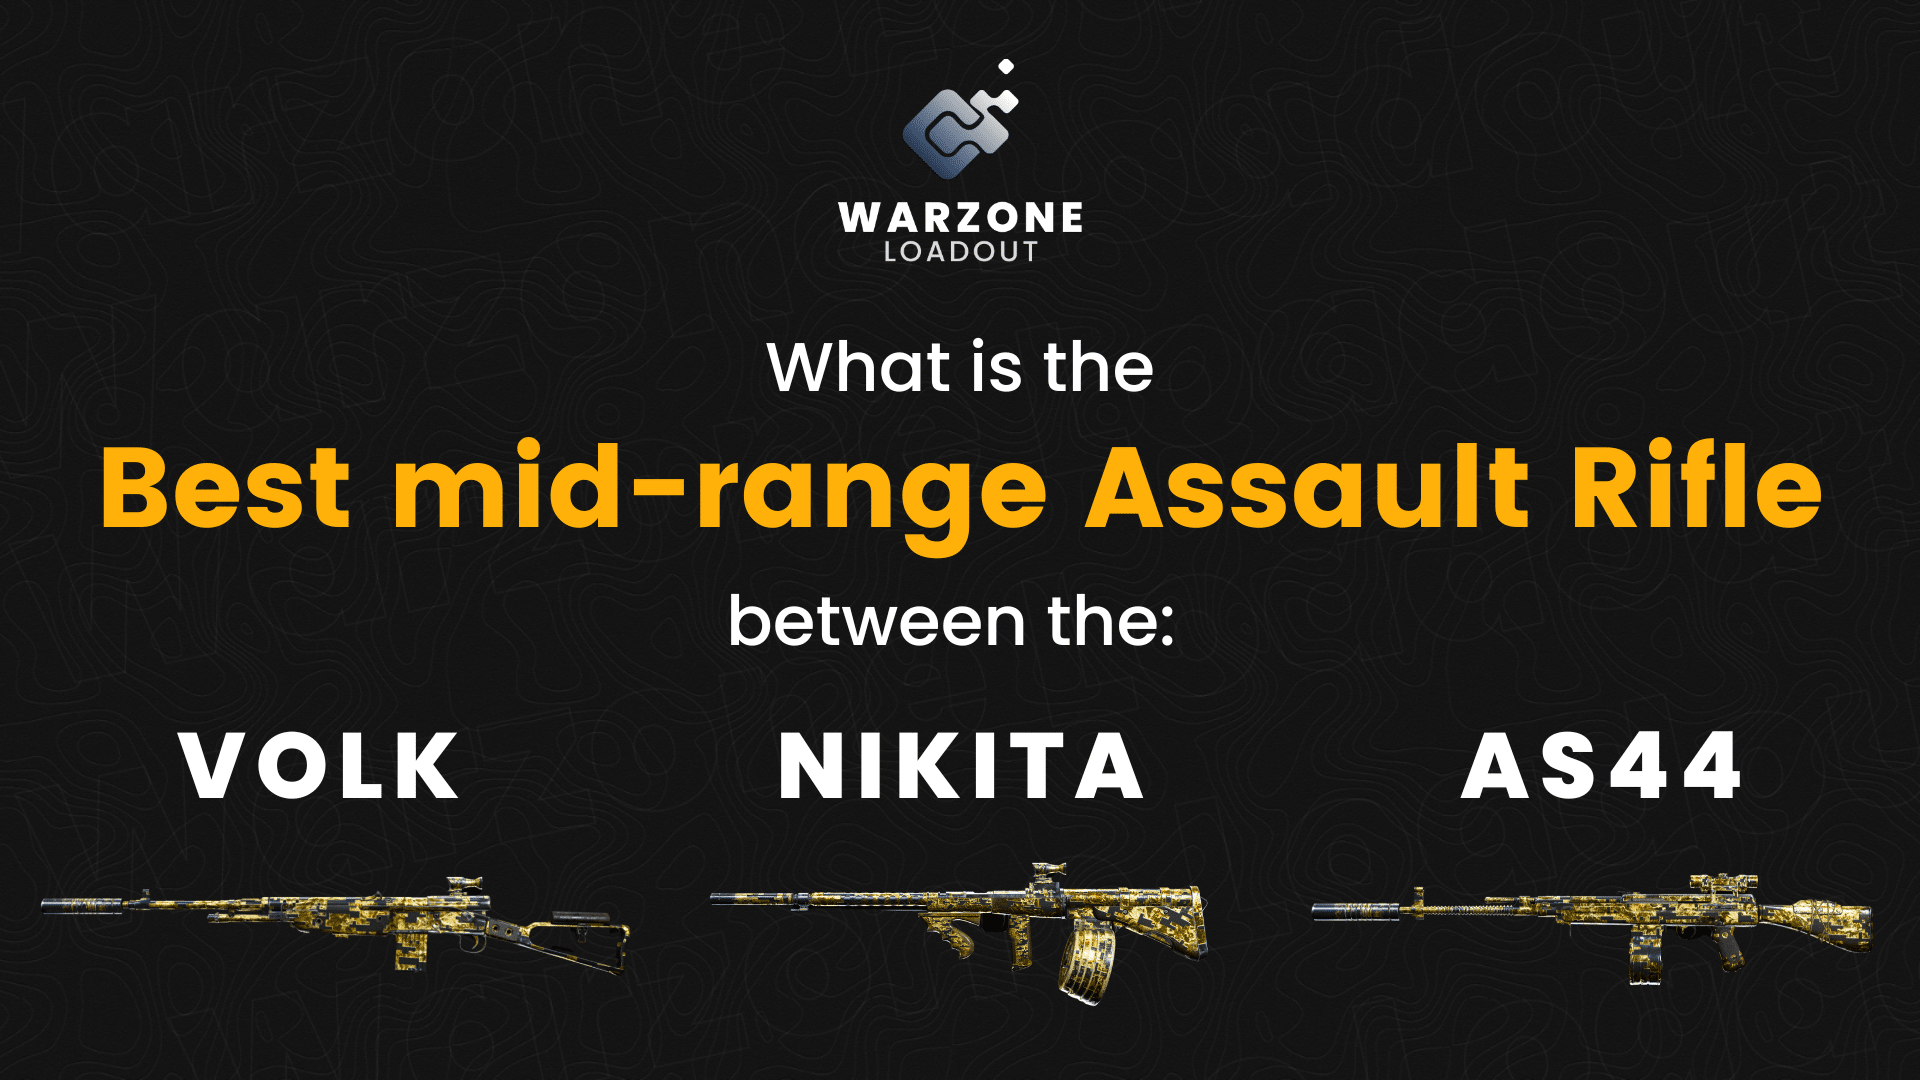 Nikita vs Volk vs AS44, what is the best mid range Assault Rifle for Warzone season 4 reloaded?